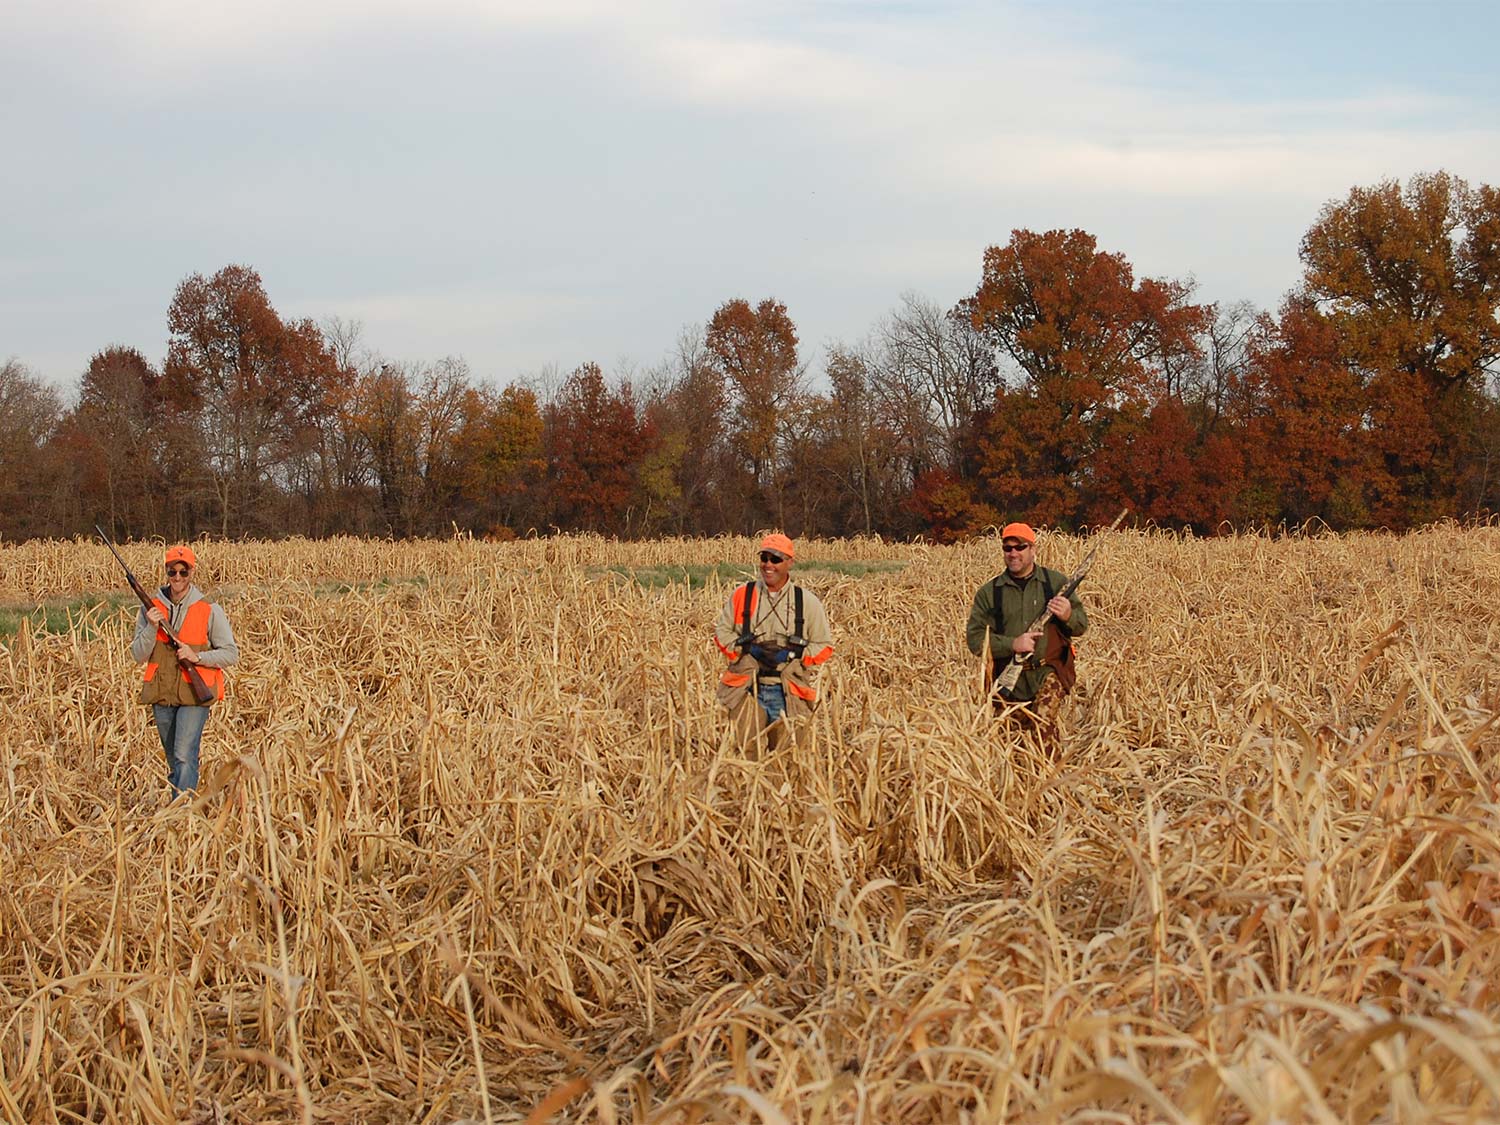 Three hunters walking through a field while bird hunting.